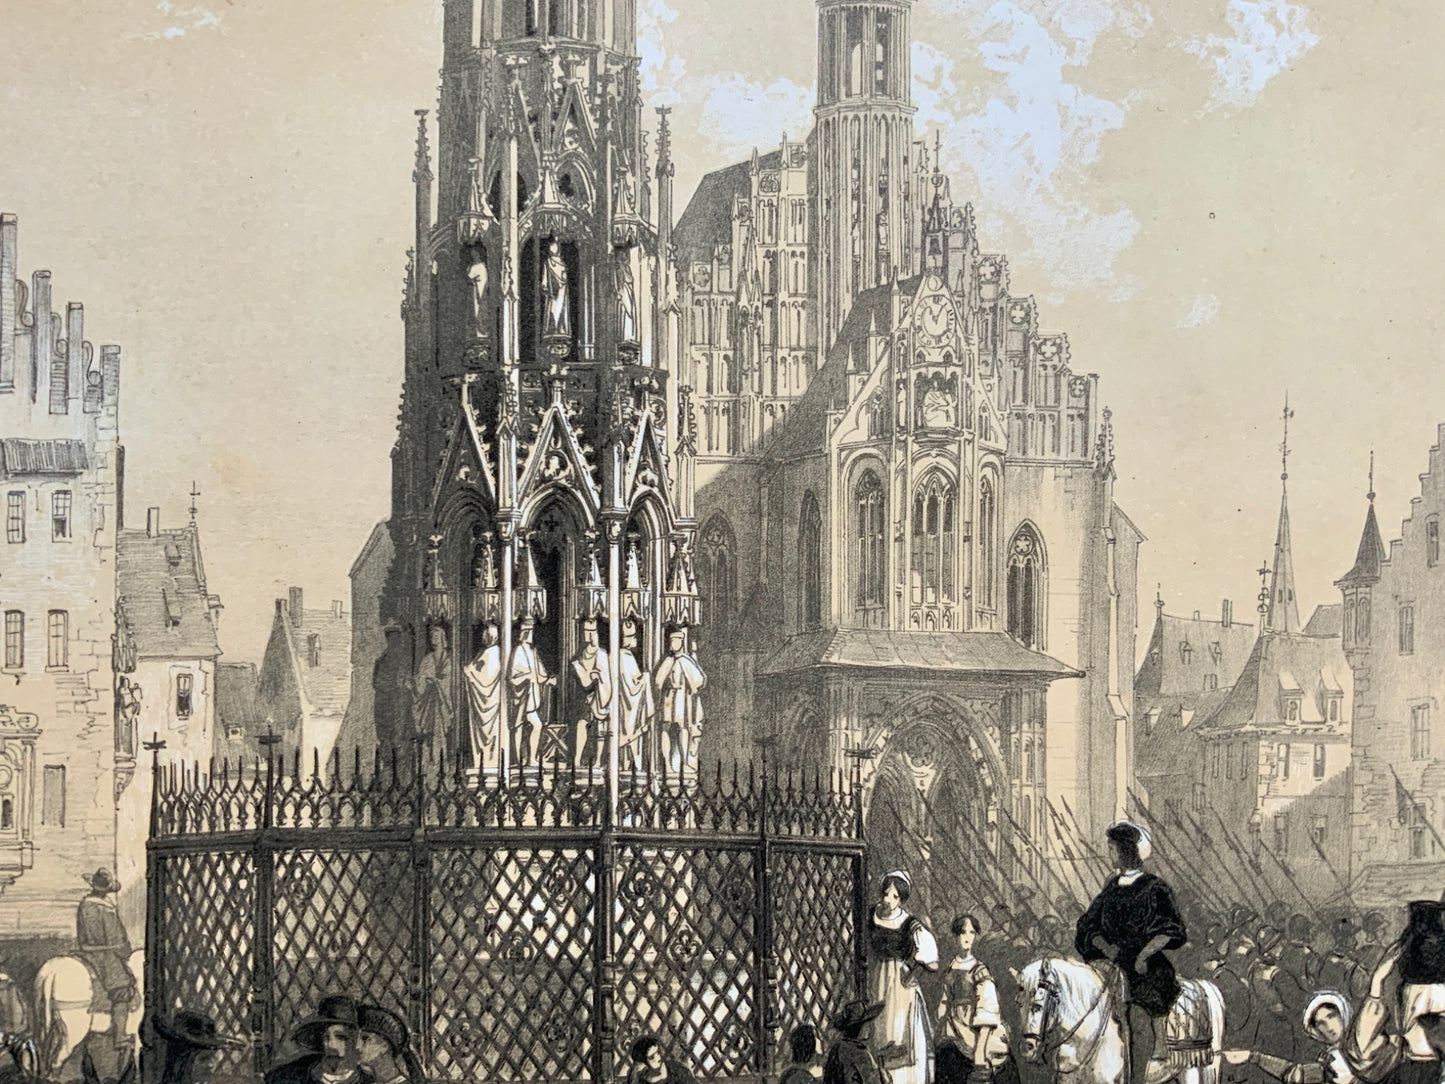 NÜRNBERG. Nuremberg. Lithographie mit Tonplatte, um 1840, 38 x 27 cm.